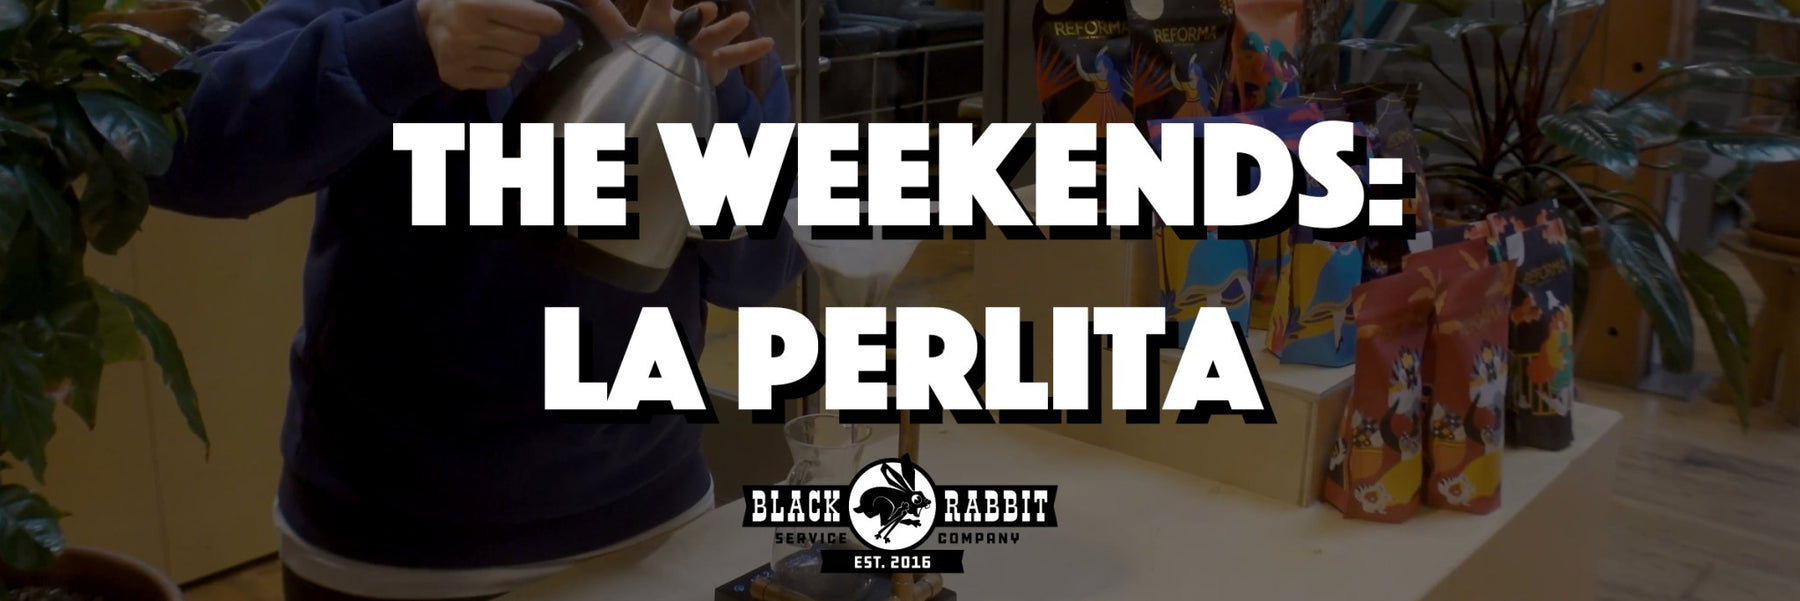 The Weekends: La Perlita | The Rabbit Hole - Black Rabbit Service Co.